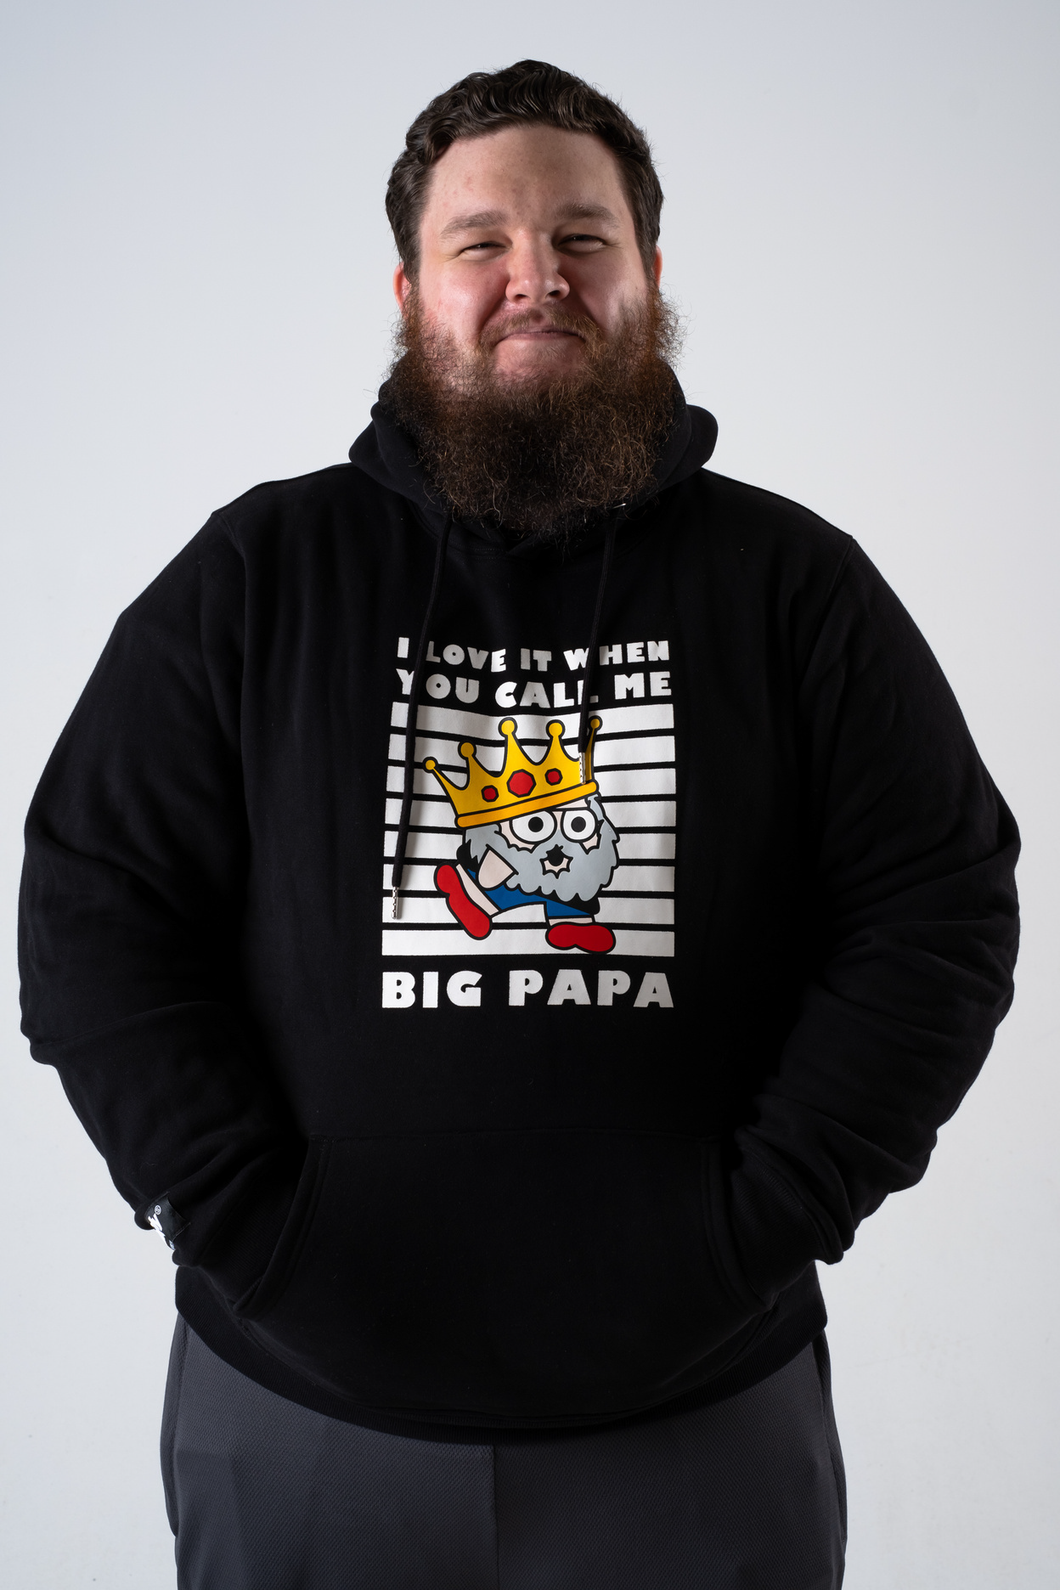 Love It When You Call Me Big Papa Hoodie